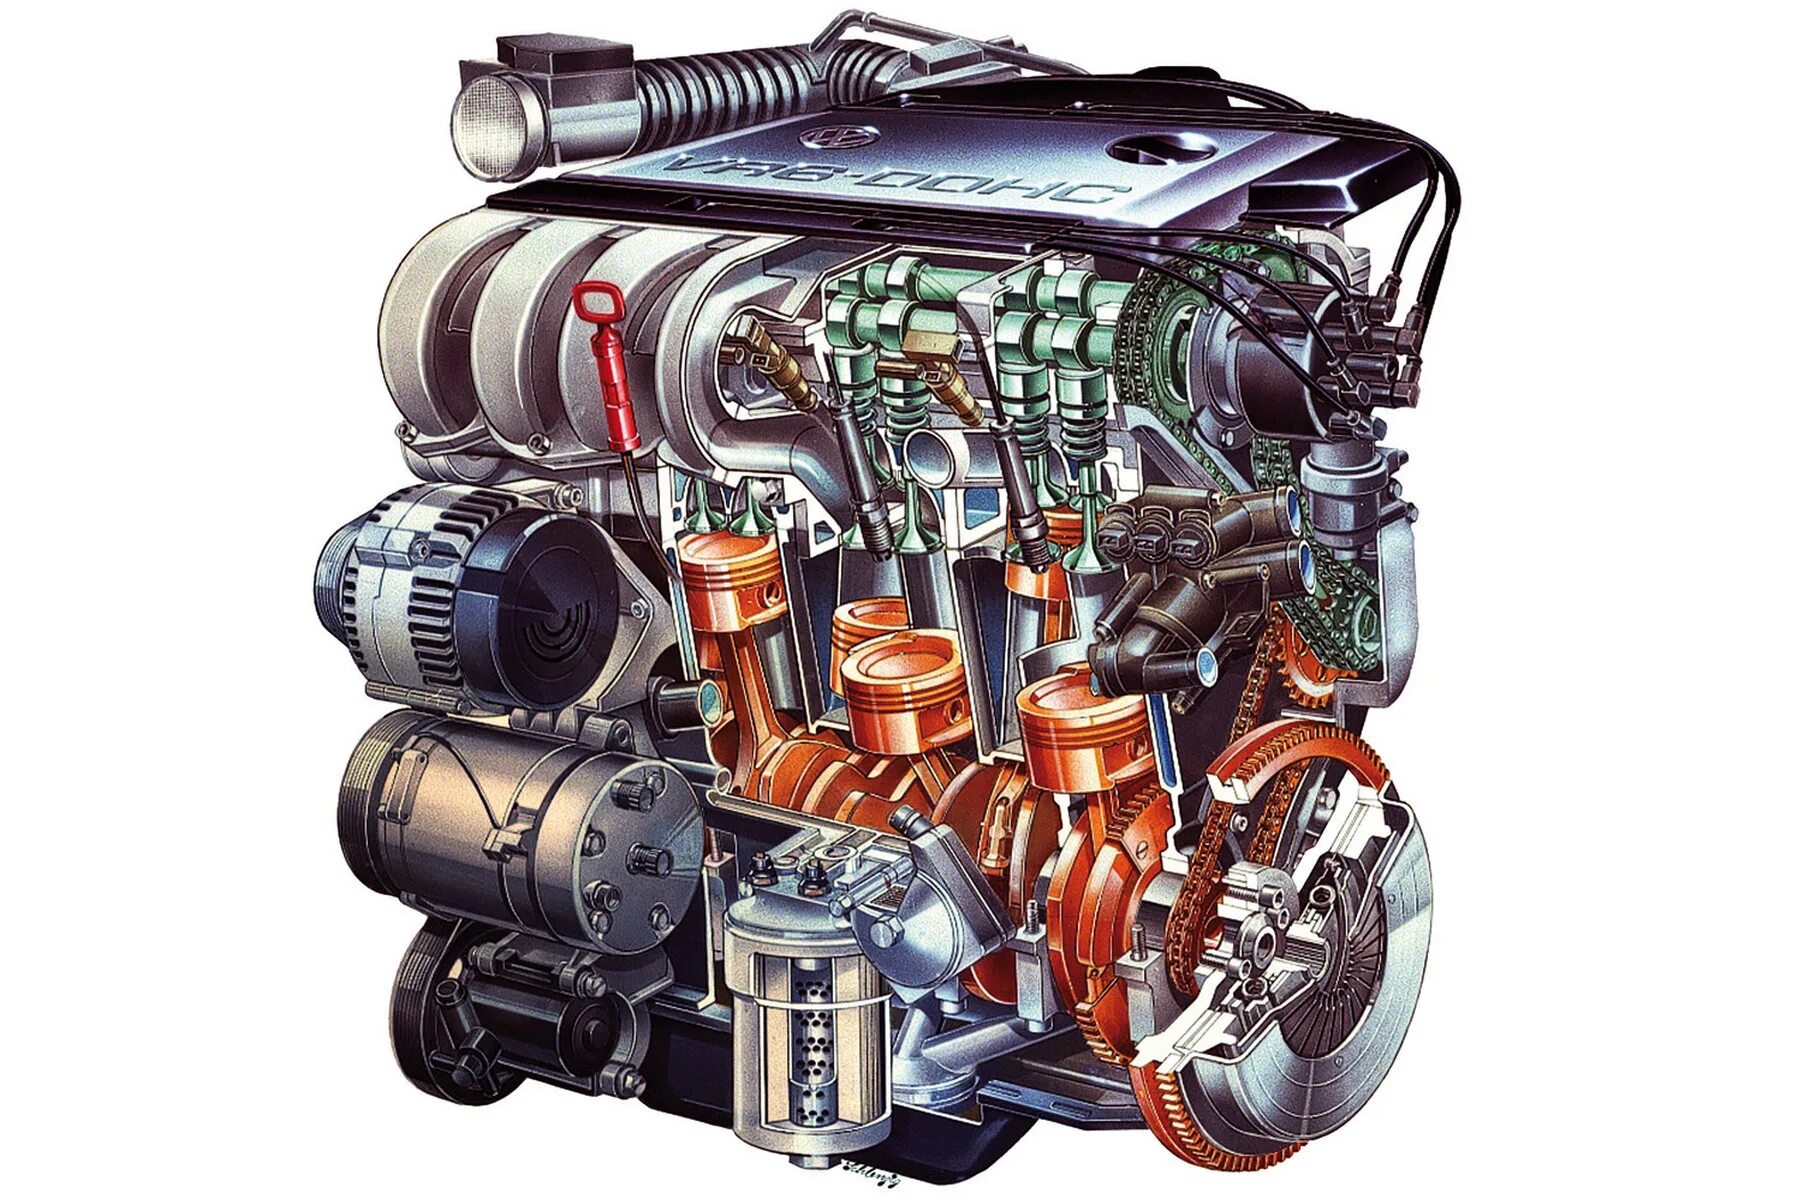 ДВС vr6 Фольксваген. Vr5 двигатель Фольксваген. Двигатель VW vr6 2.8. Мотор вр6. В цехе 6 моторов для каждого мотора